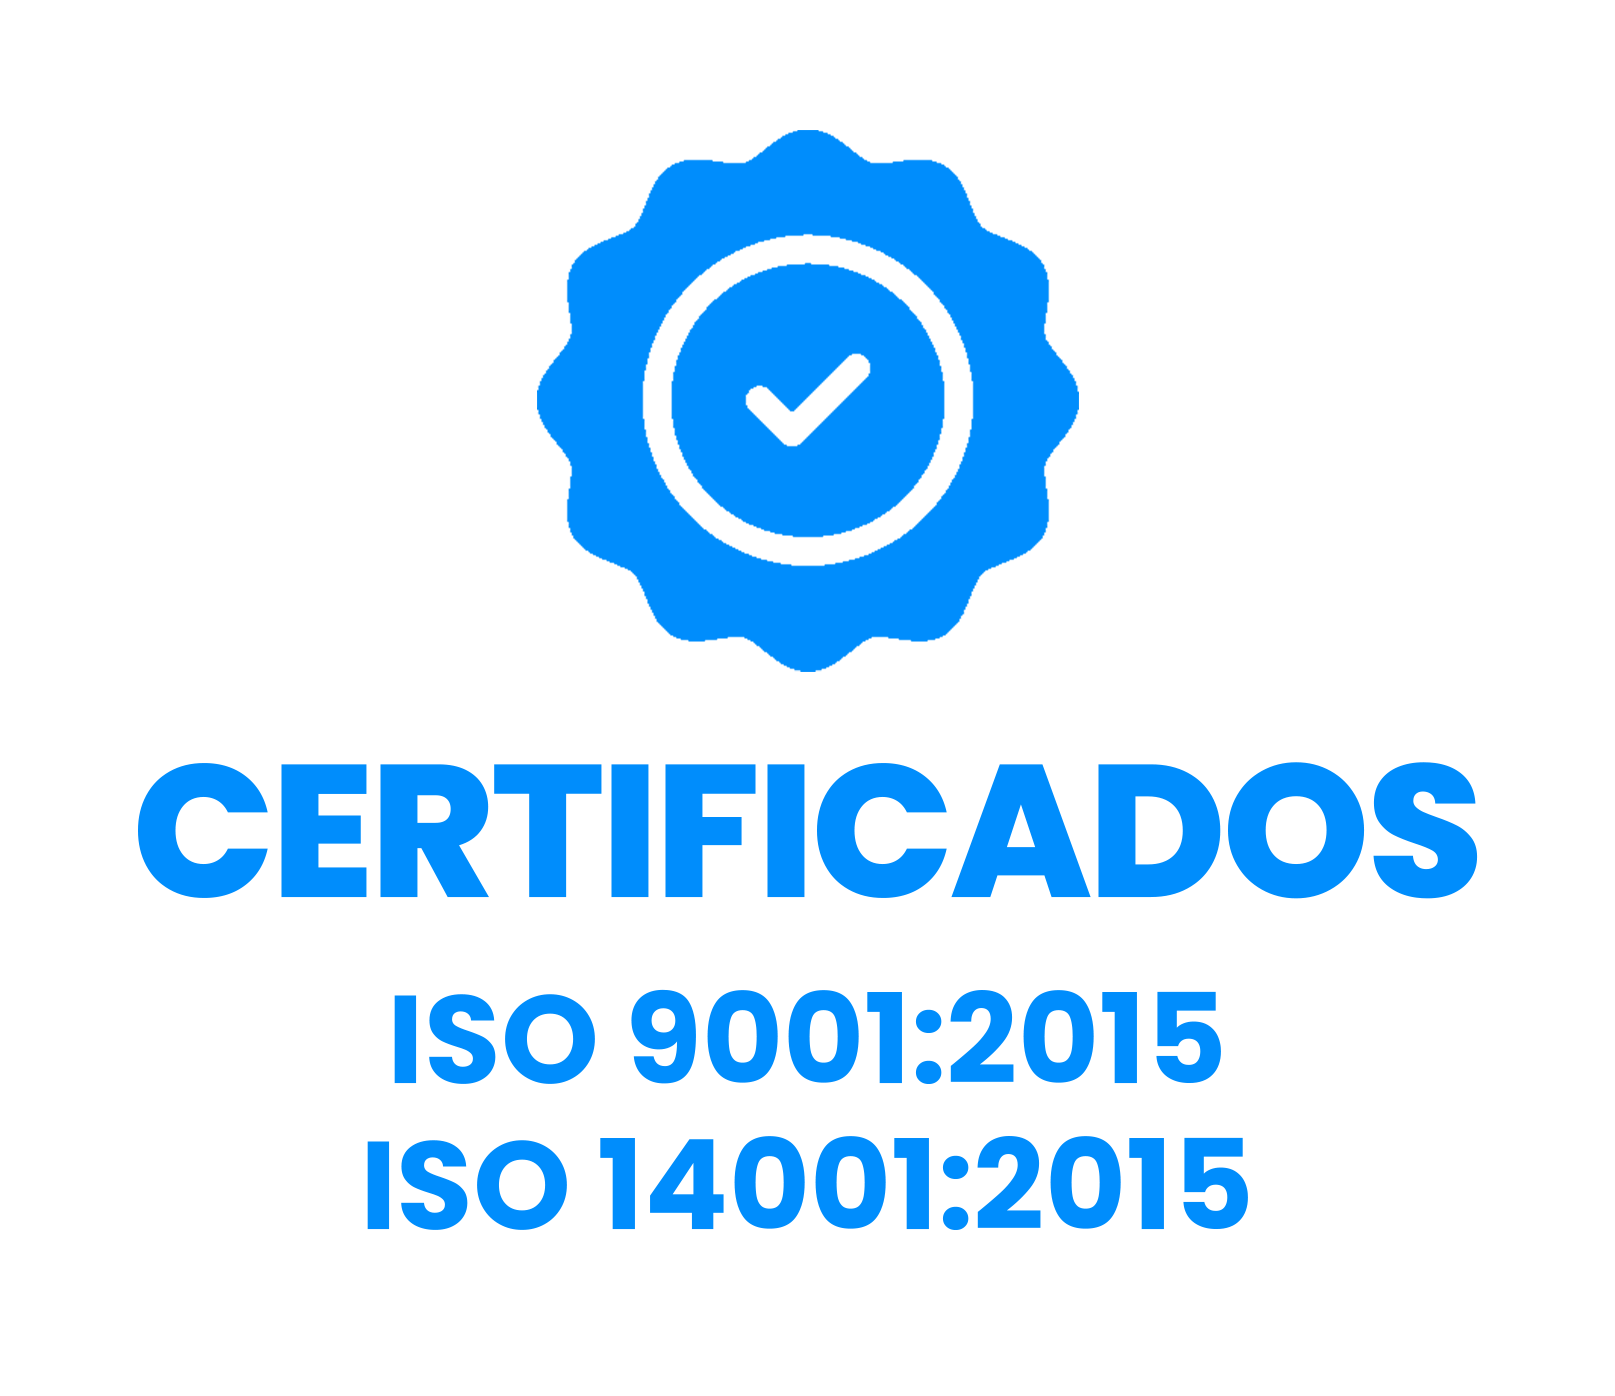 Certificados ISO